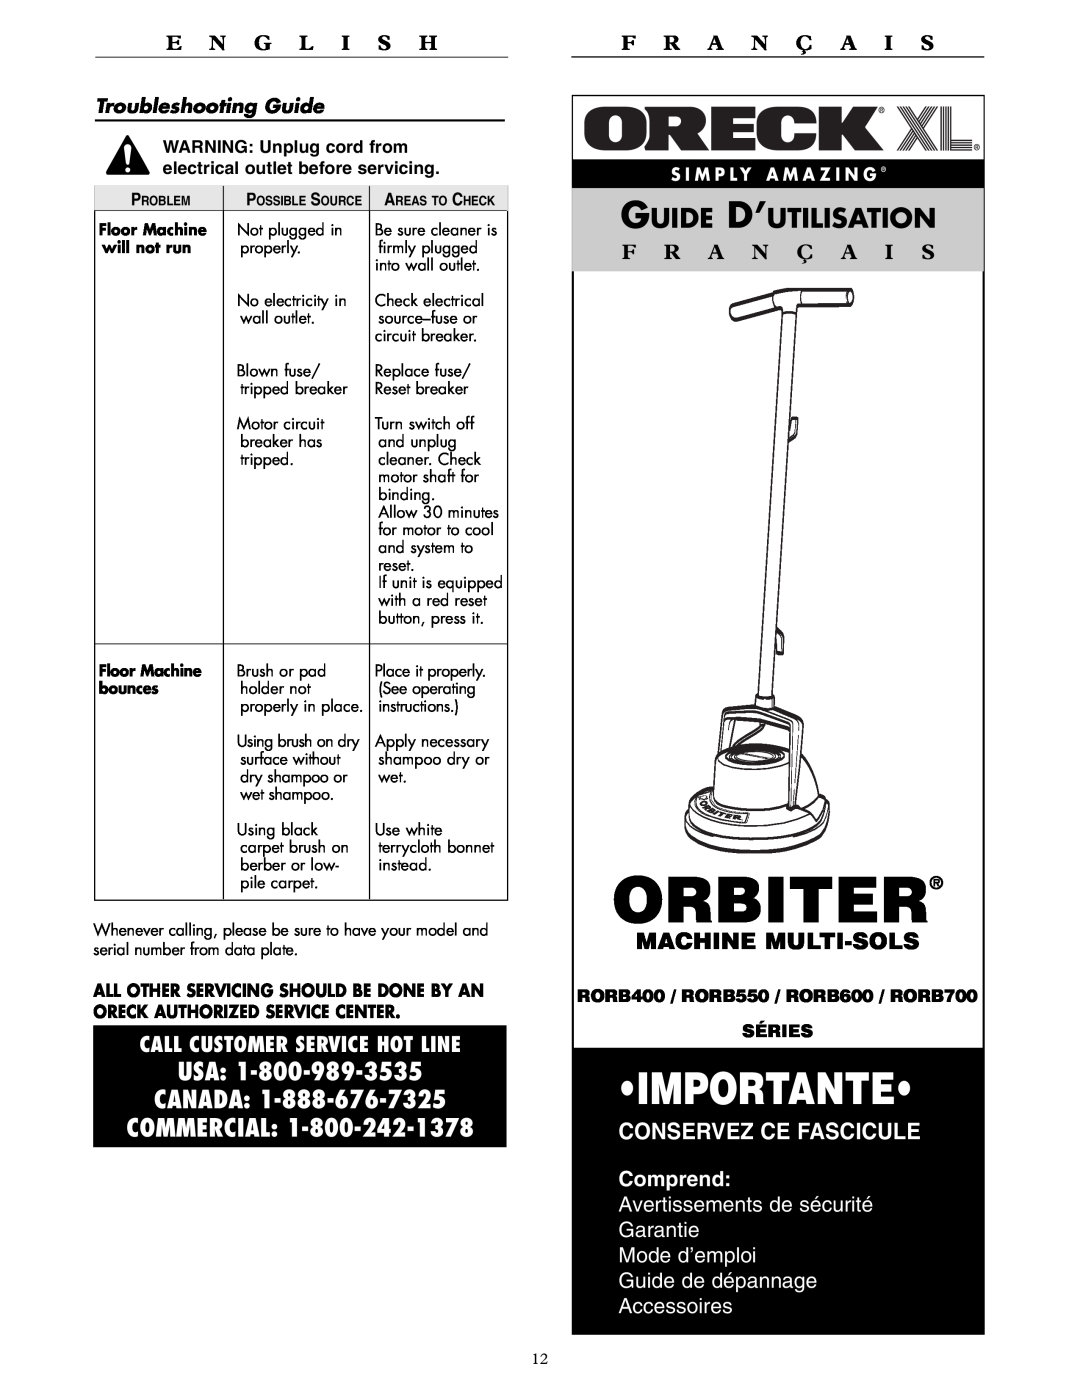 Oreck RORB700 Orbiter, Importante, Guide D’Utilisation, Usa Canada Commercial, Machine Multi-Sols, Conservez Ce Fascicule 